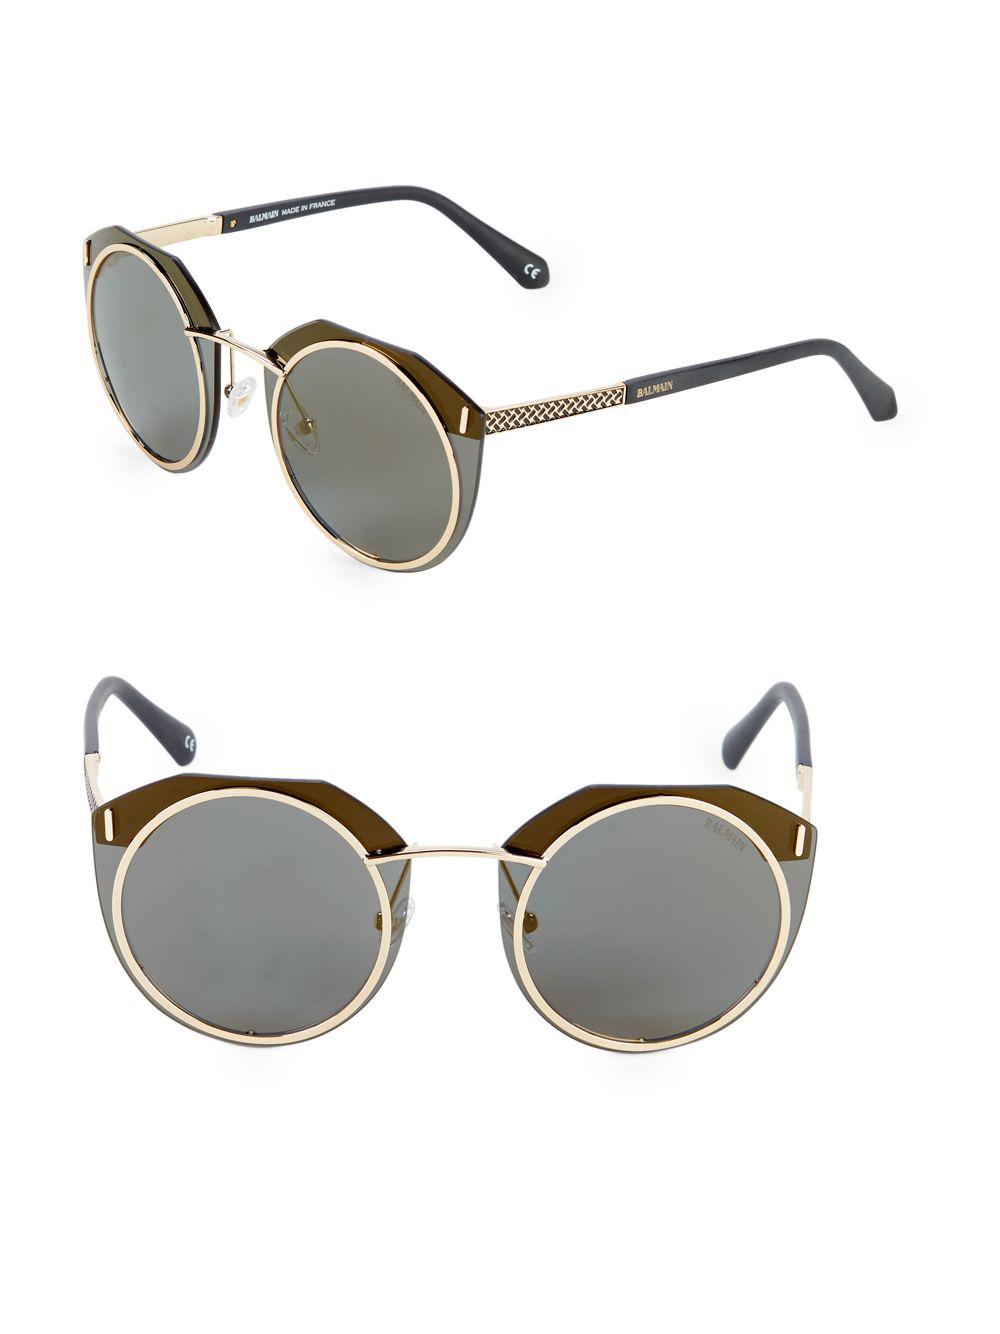 Balmain 61mm Round Sunglasses in Metallic for Men - Lyst